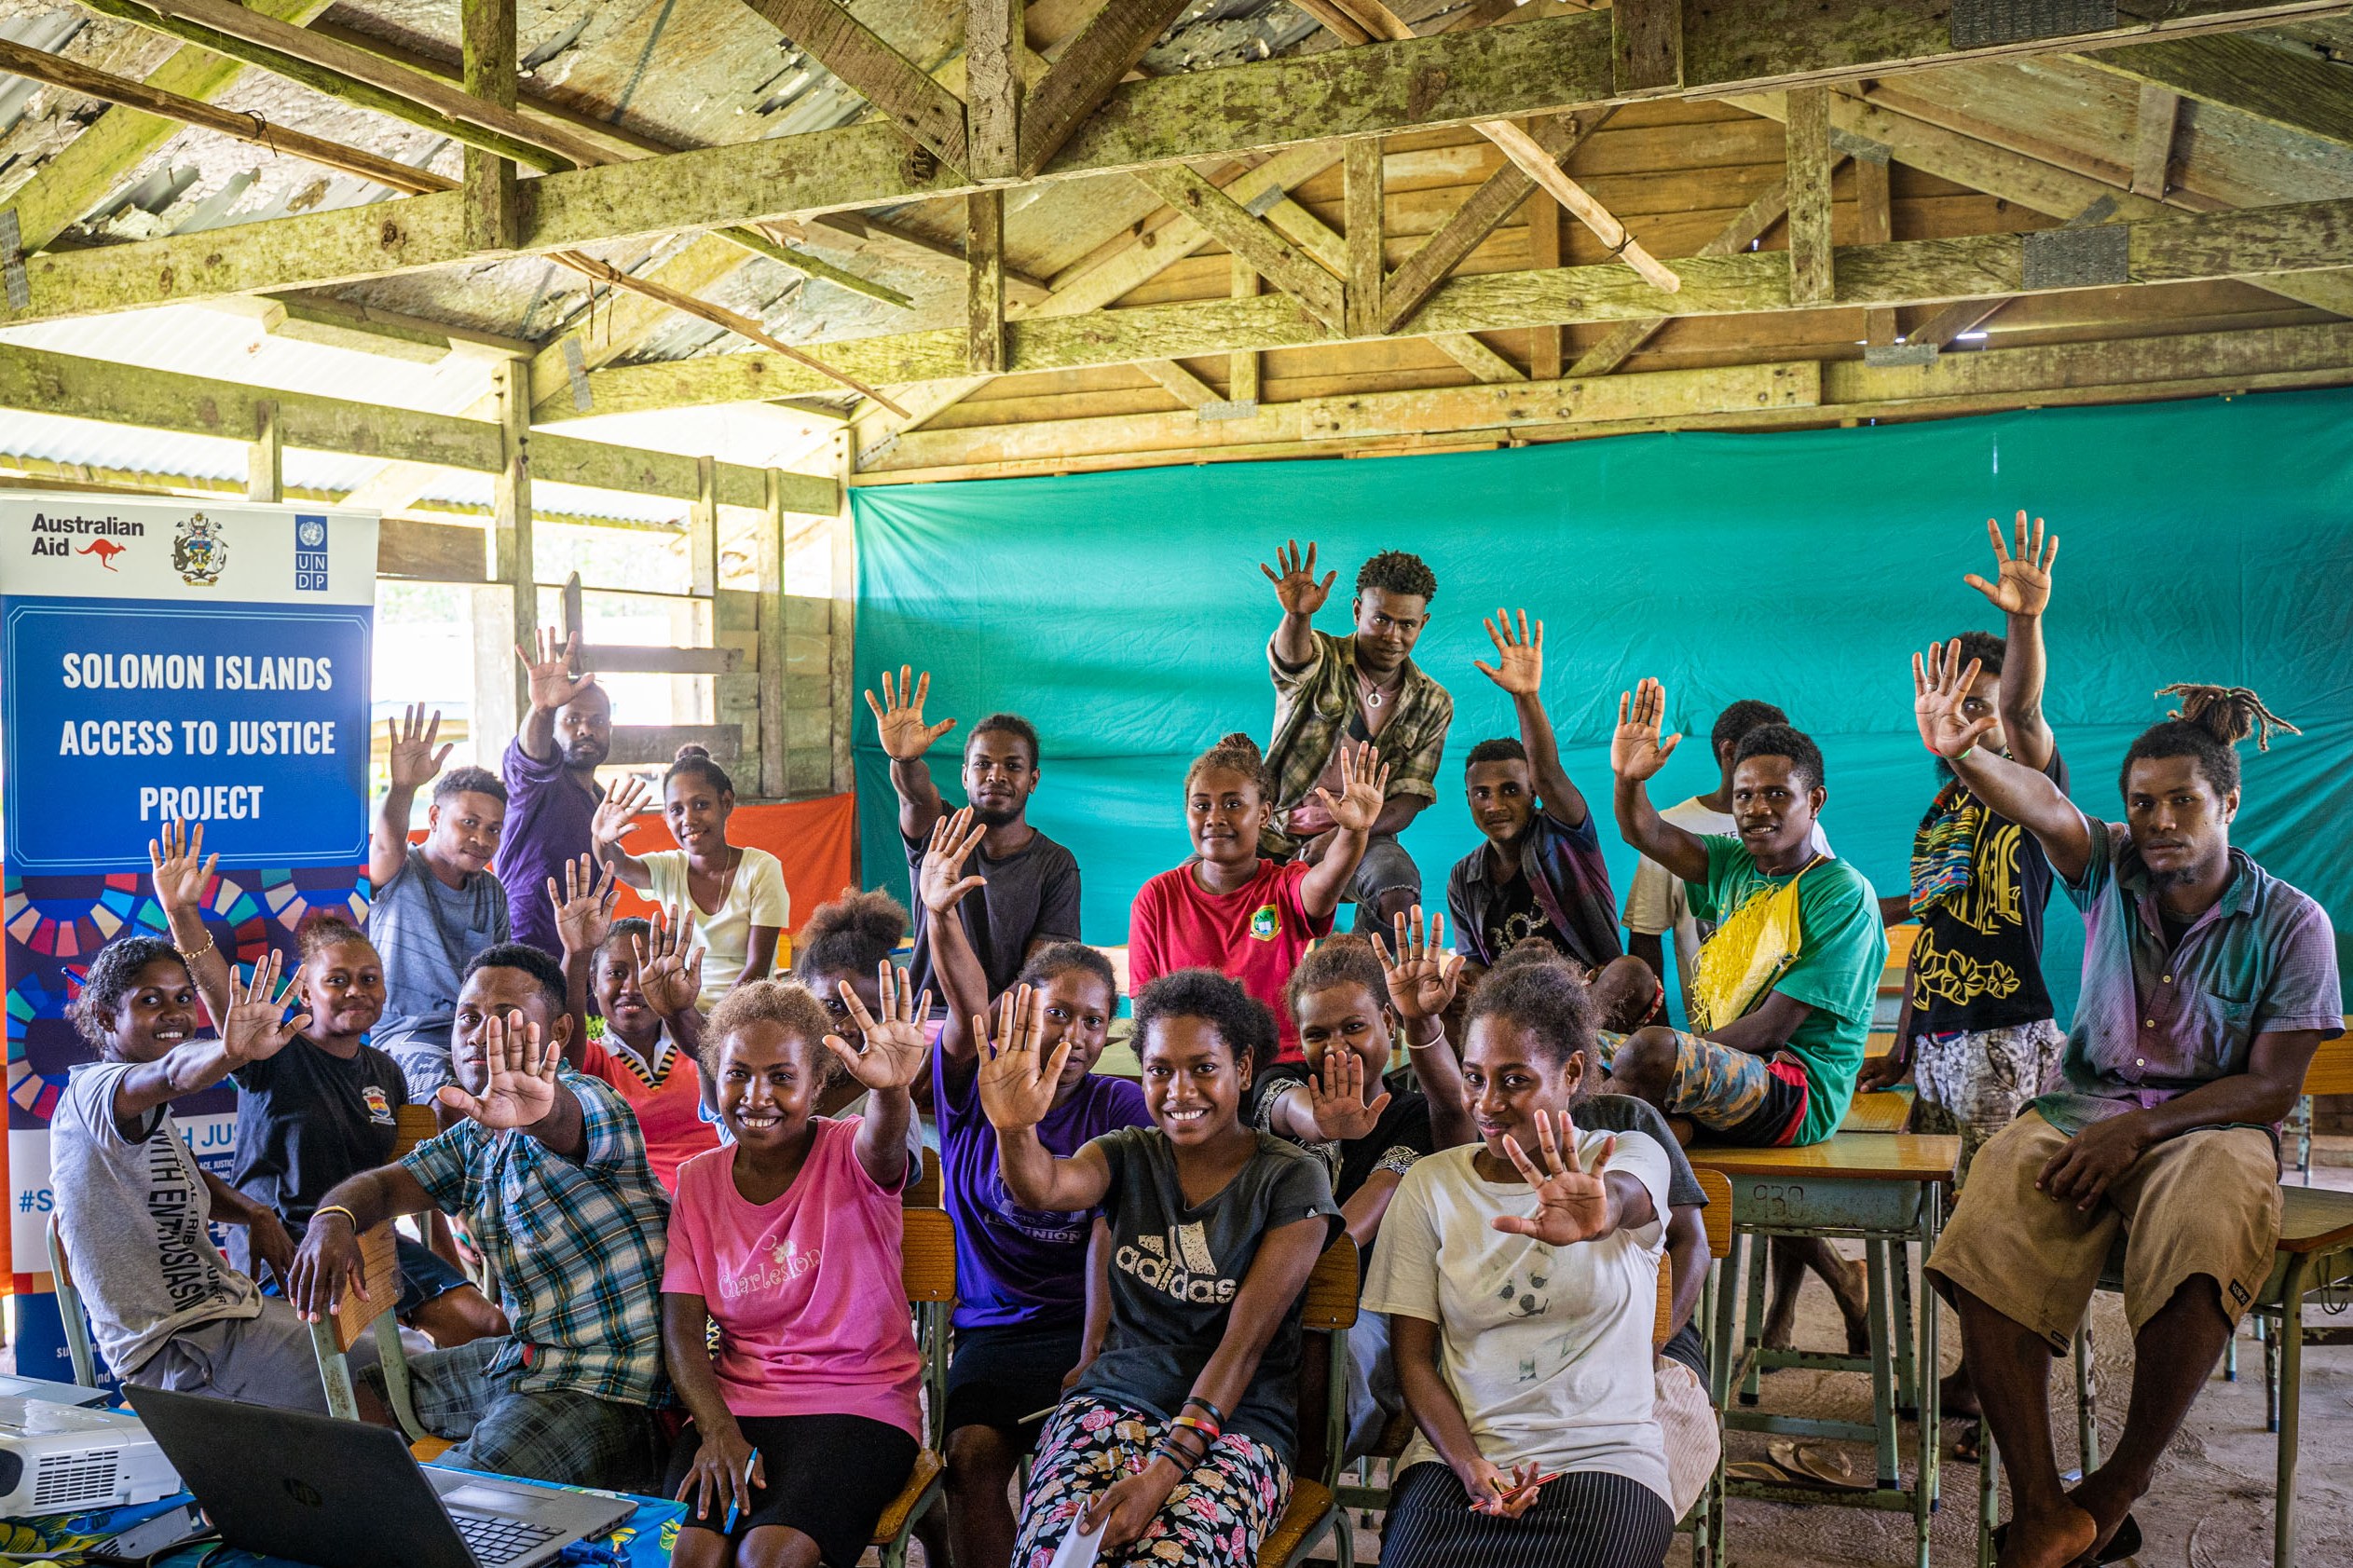 Solomon Islands access to justice